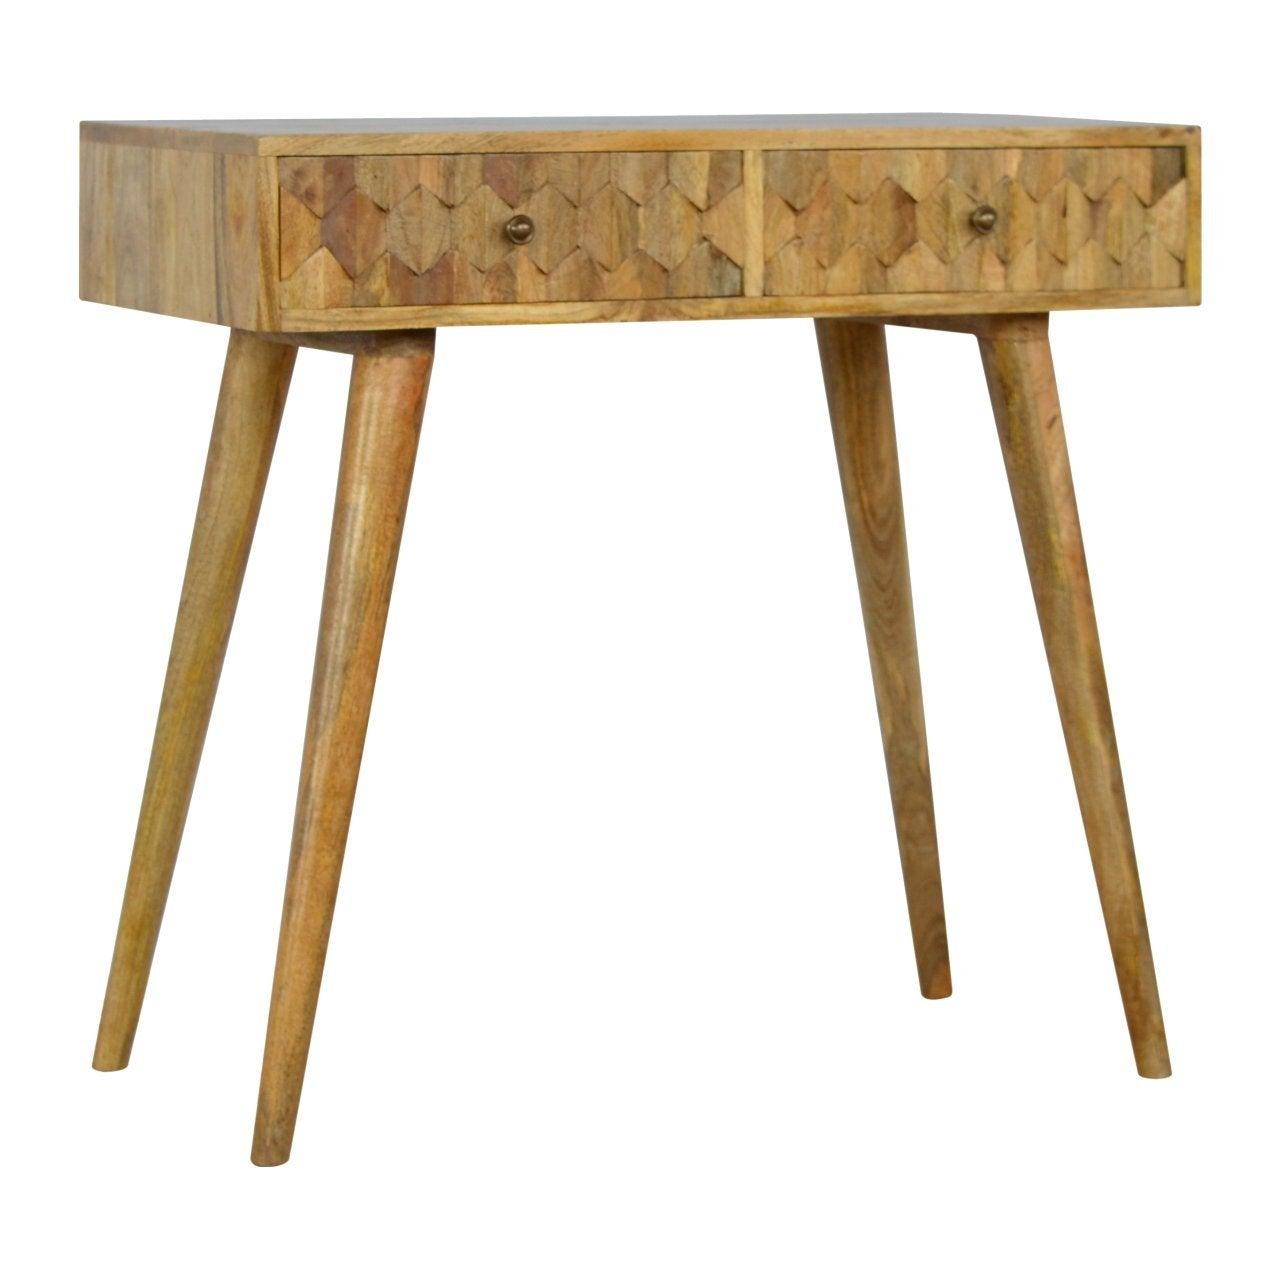 Pineapple carved console table - crimblefest furniture - image 2